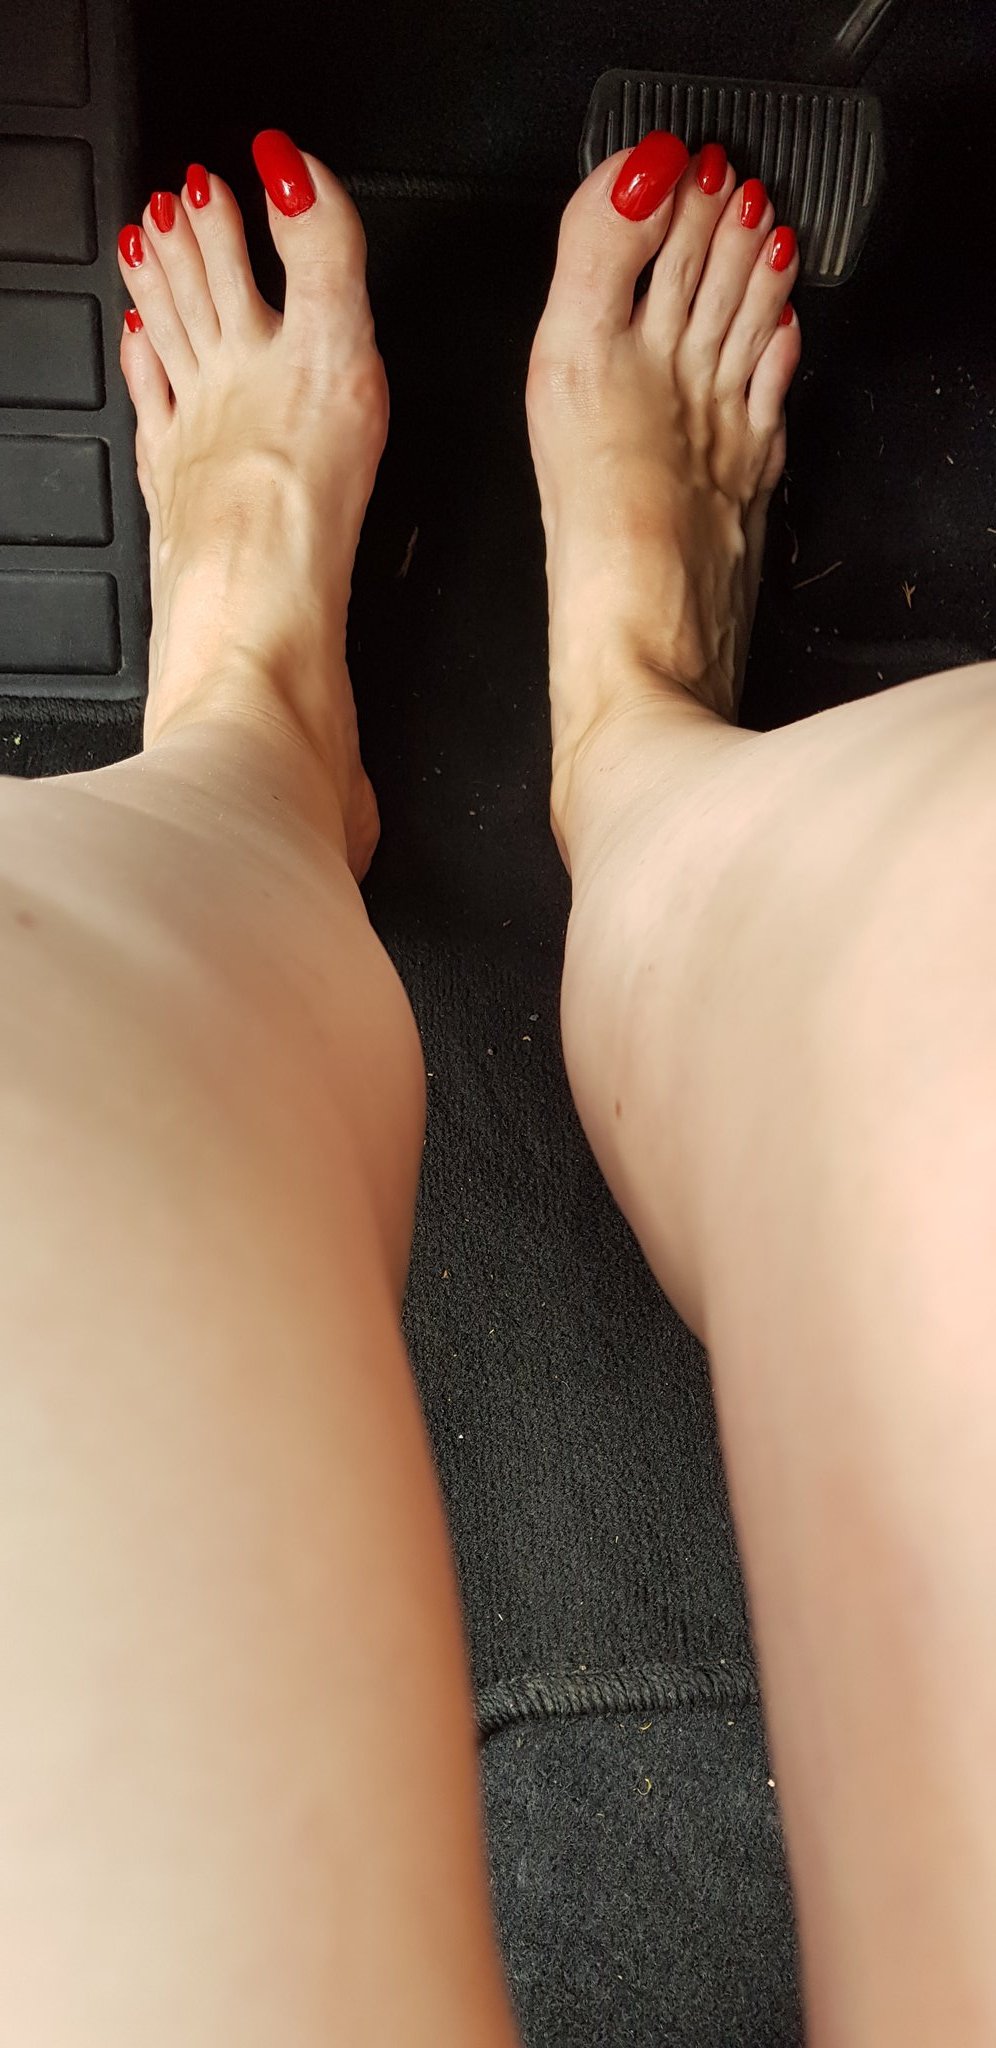 Miss Danielle Heel on X: Do you like natural toenails? Or better